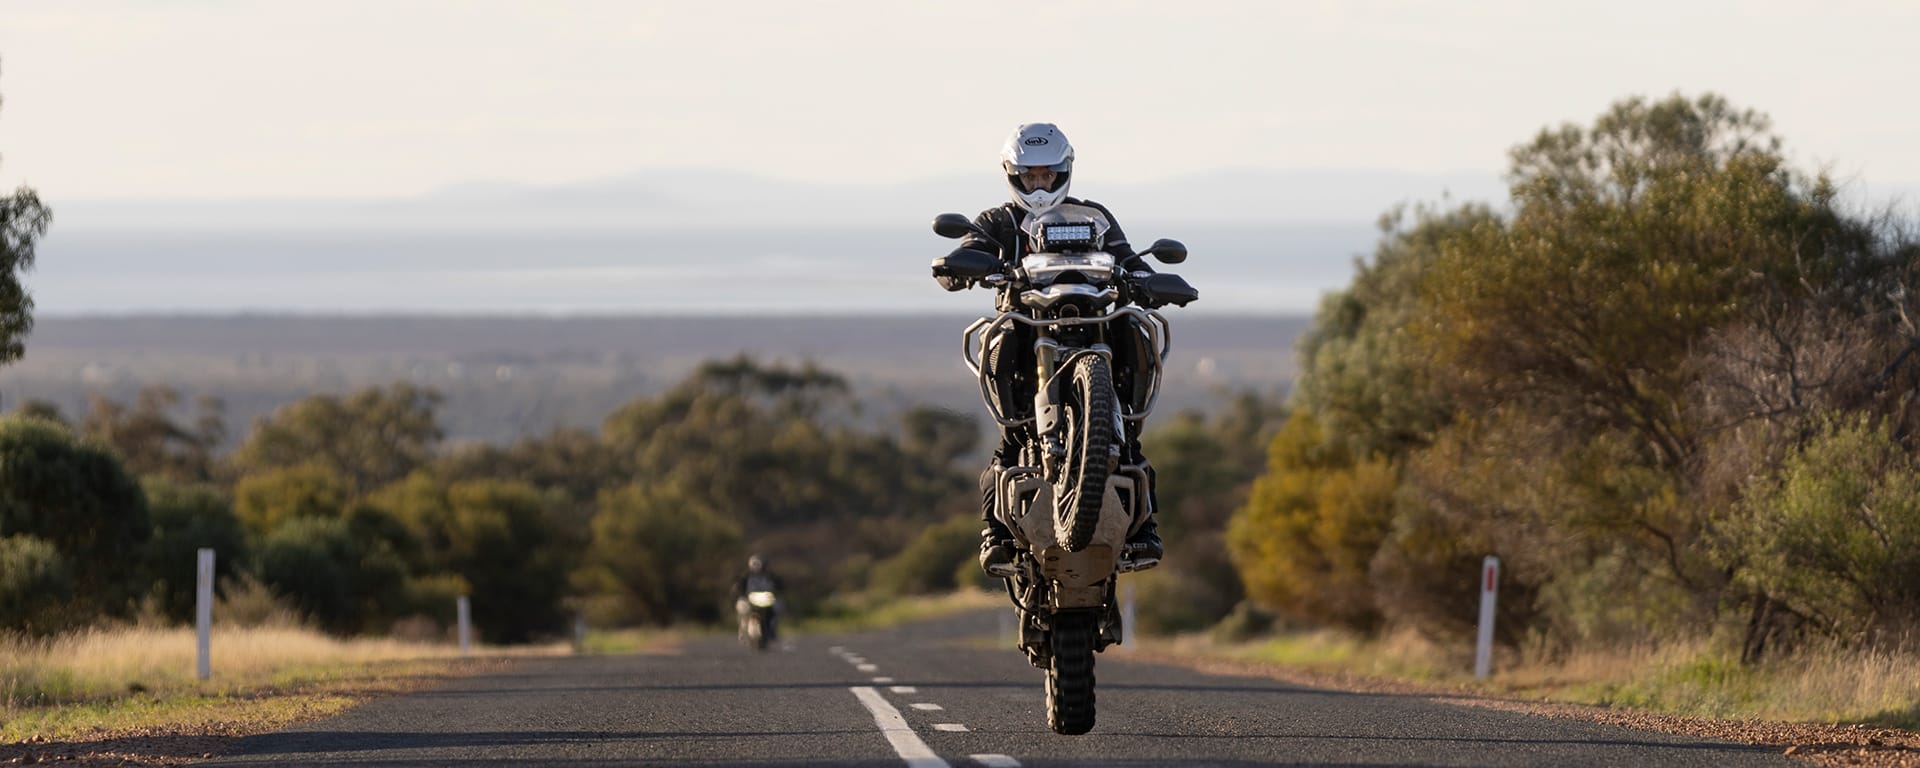 Triumph Tiger 1200 epic adventures in Australia on road 